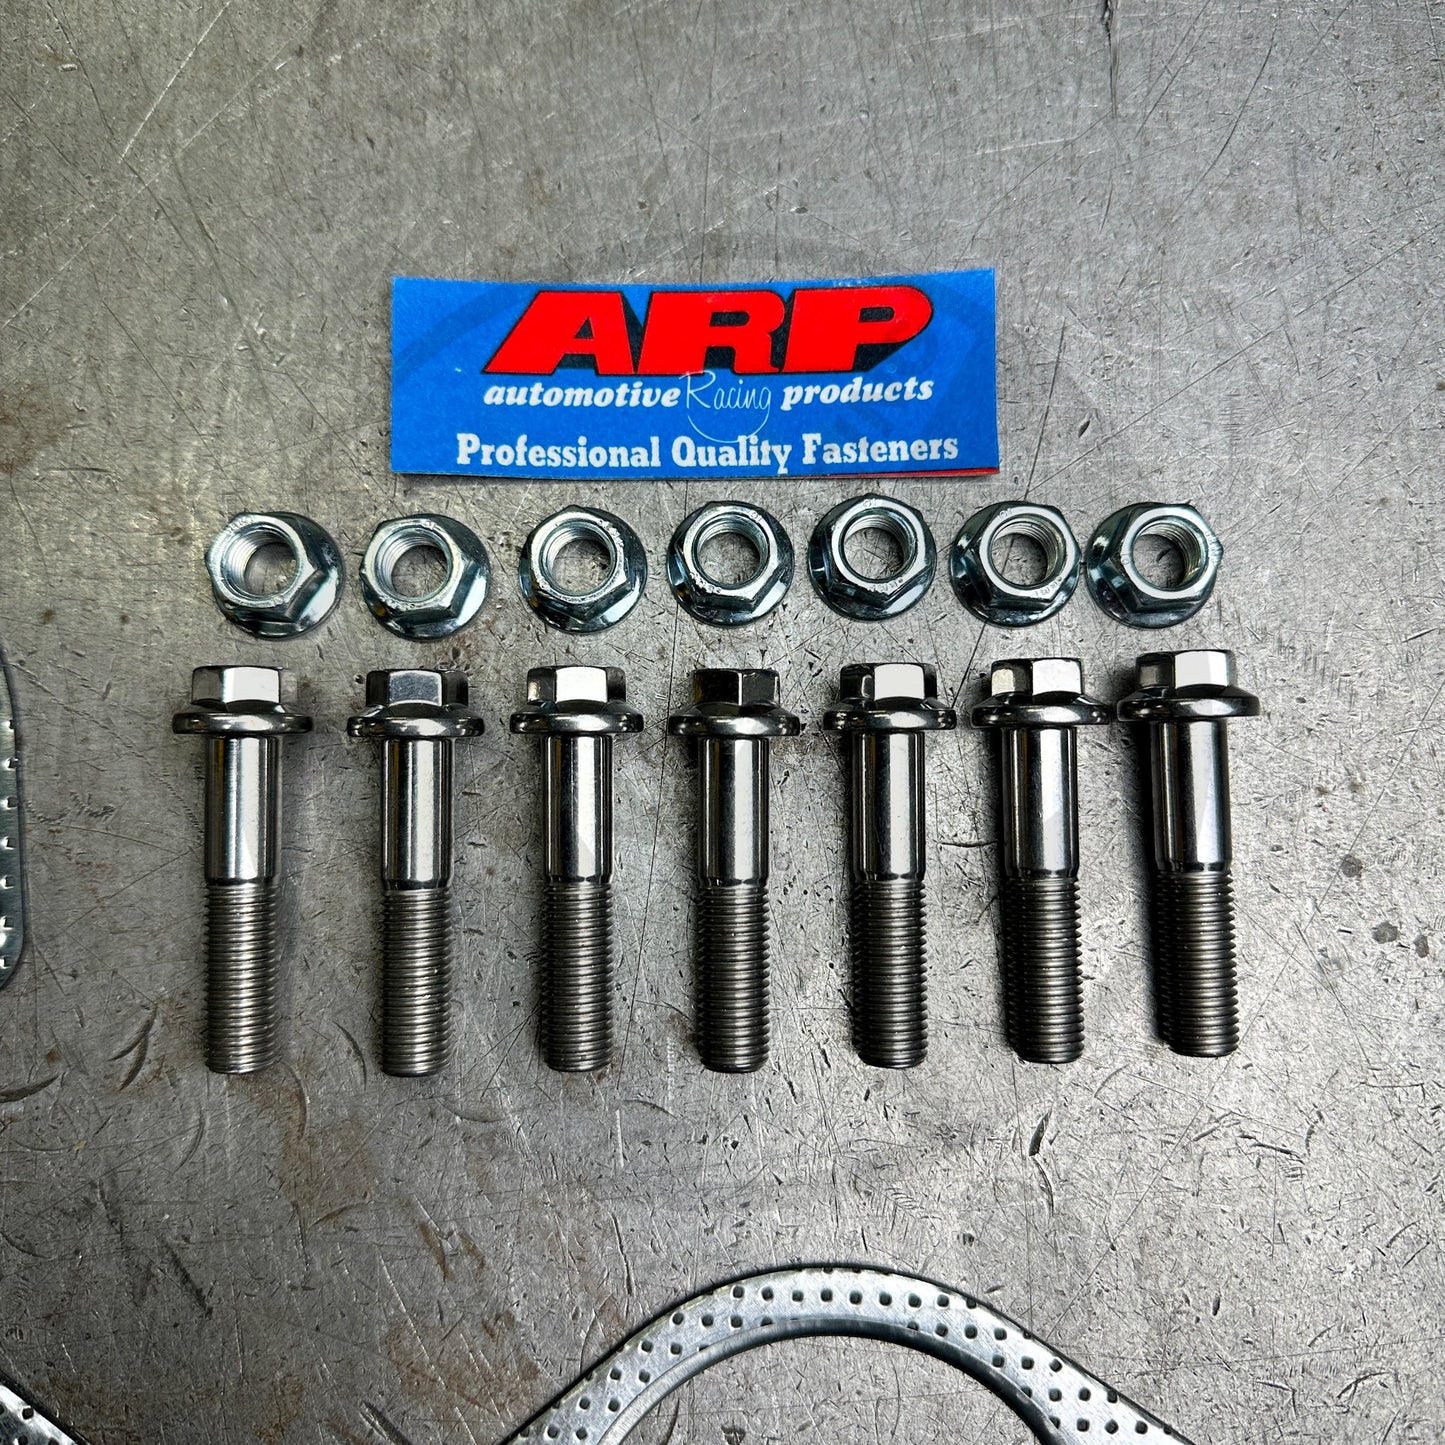 ARP Stainless Exhaust Gasket Hardware Kit (2.75 inch) For Honda Civic Acura Integra